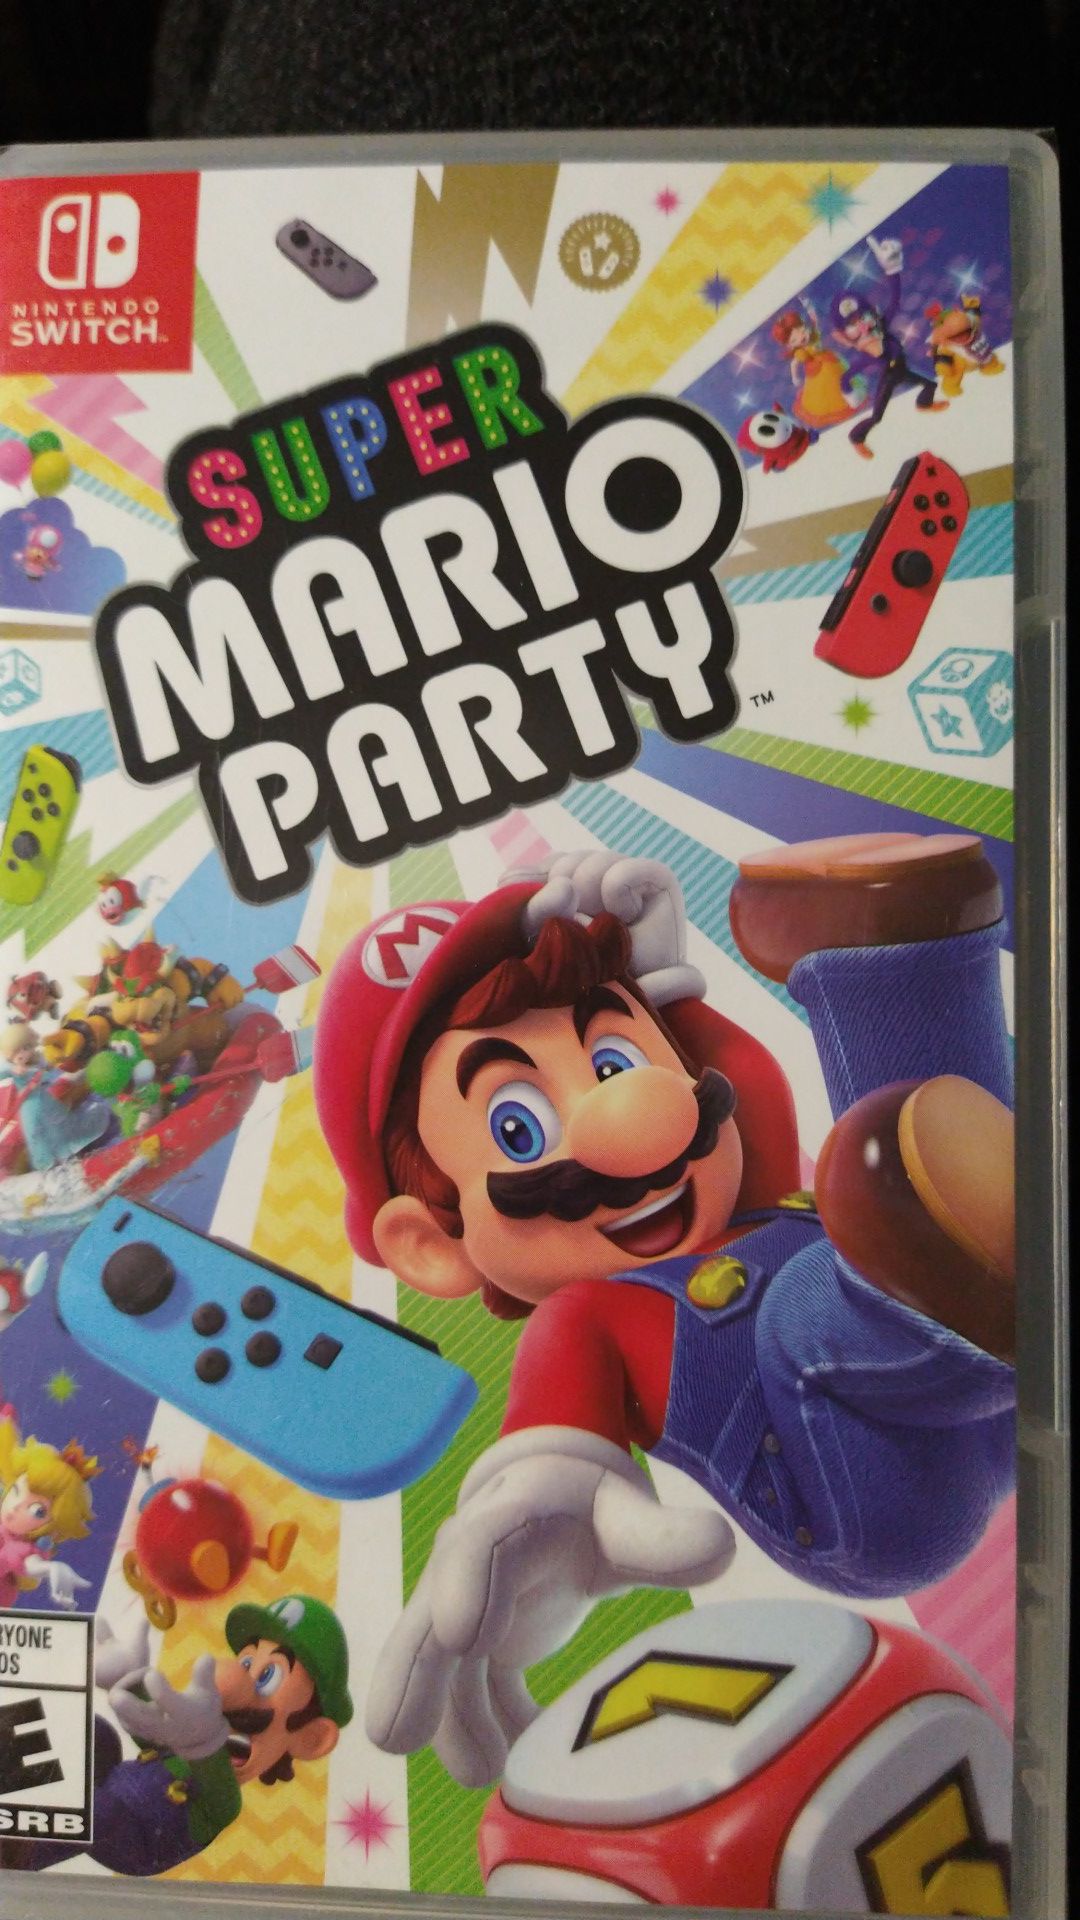 New Super Mario Party